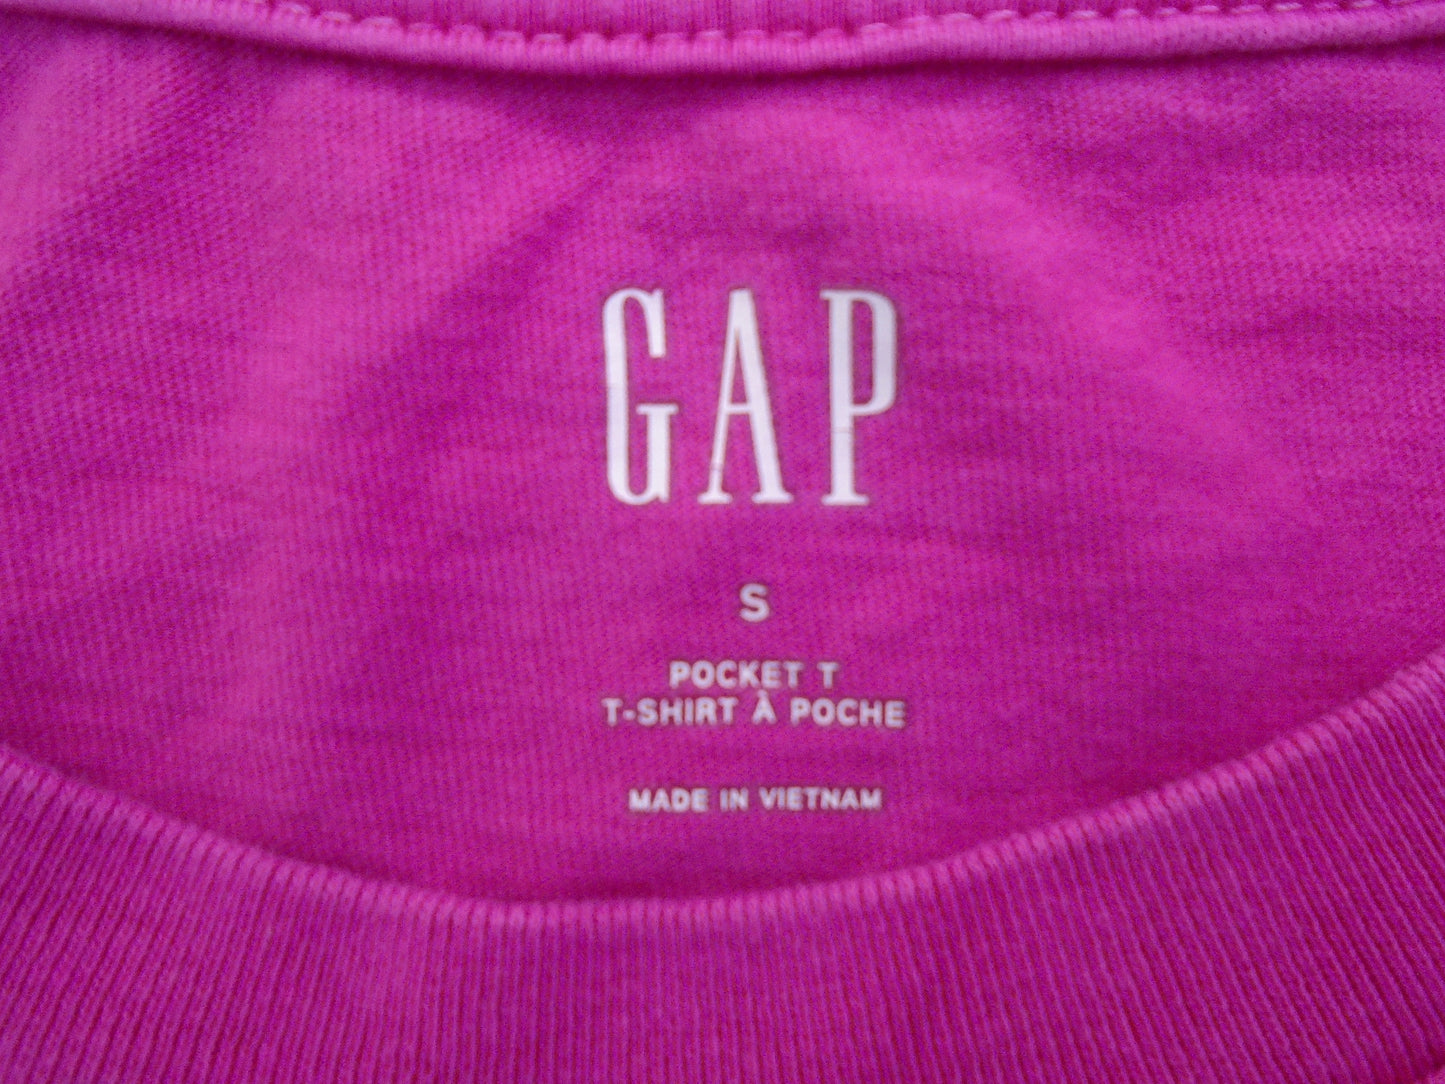 Camiseta Mujer GAP. Color: Violeta. Tamaño: S.